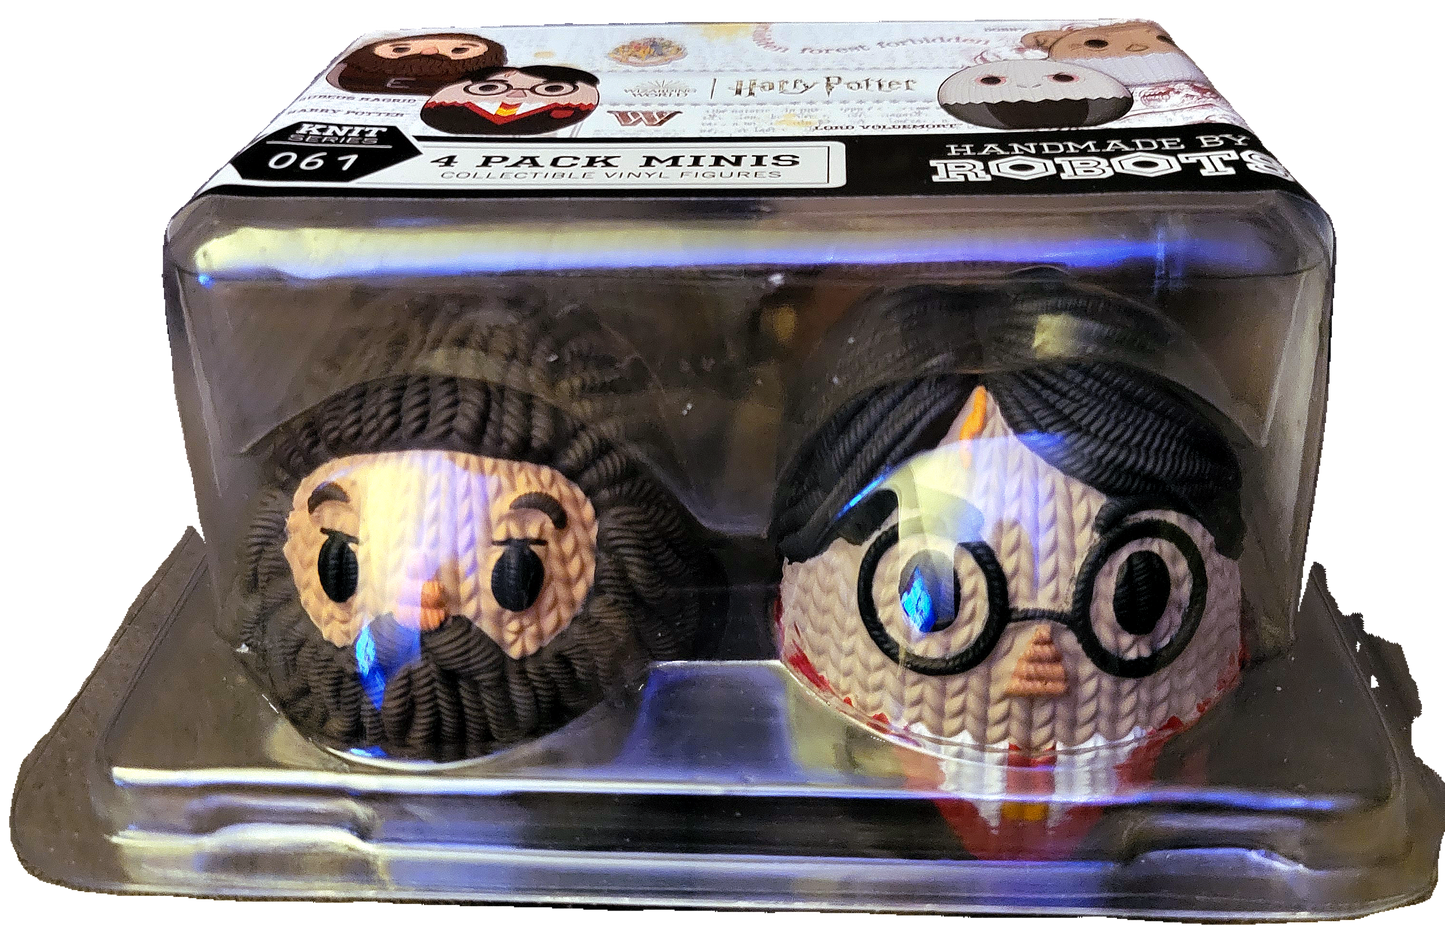 Robots Harry Potter Knit Series 4 Pack Minis Collectible Vinyl Figures